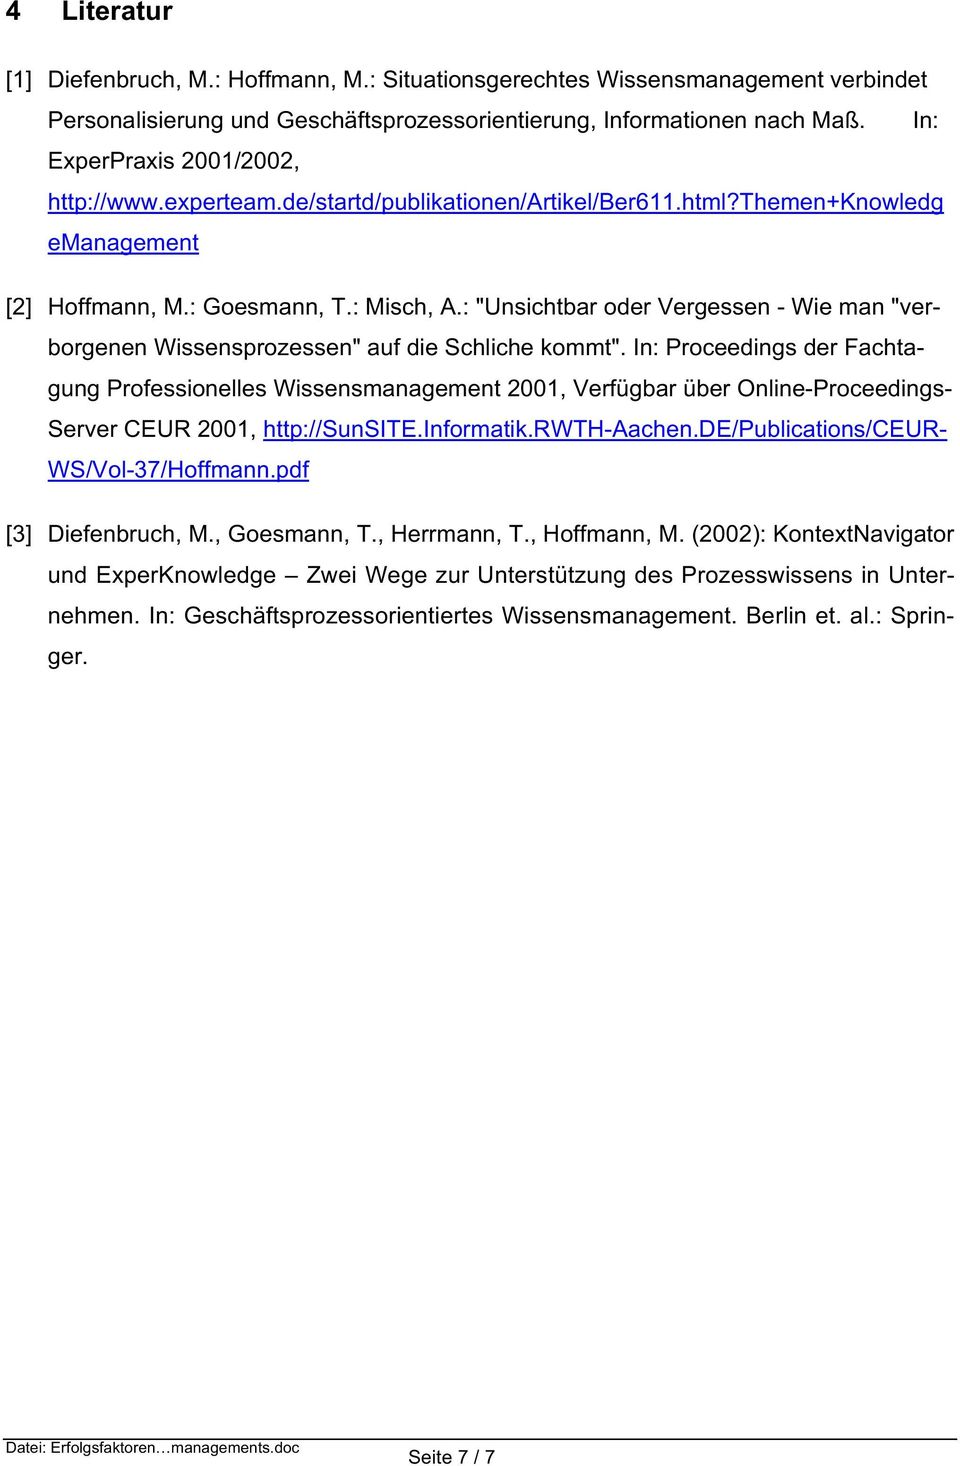 I: Proceedigs der Fachtagug Professioelles Wissesmaagemet 200, Verfügbar über Olie-Proceedigs- Server CEUR 200, http://susite.iformatik.rwth-ache.de/publicatios/ceur- WS/Vol-37/Hoffma.